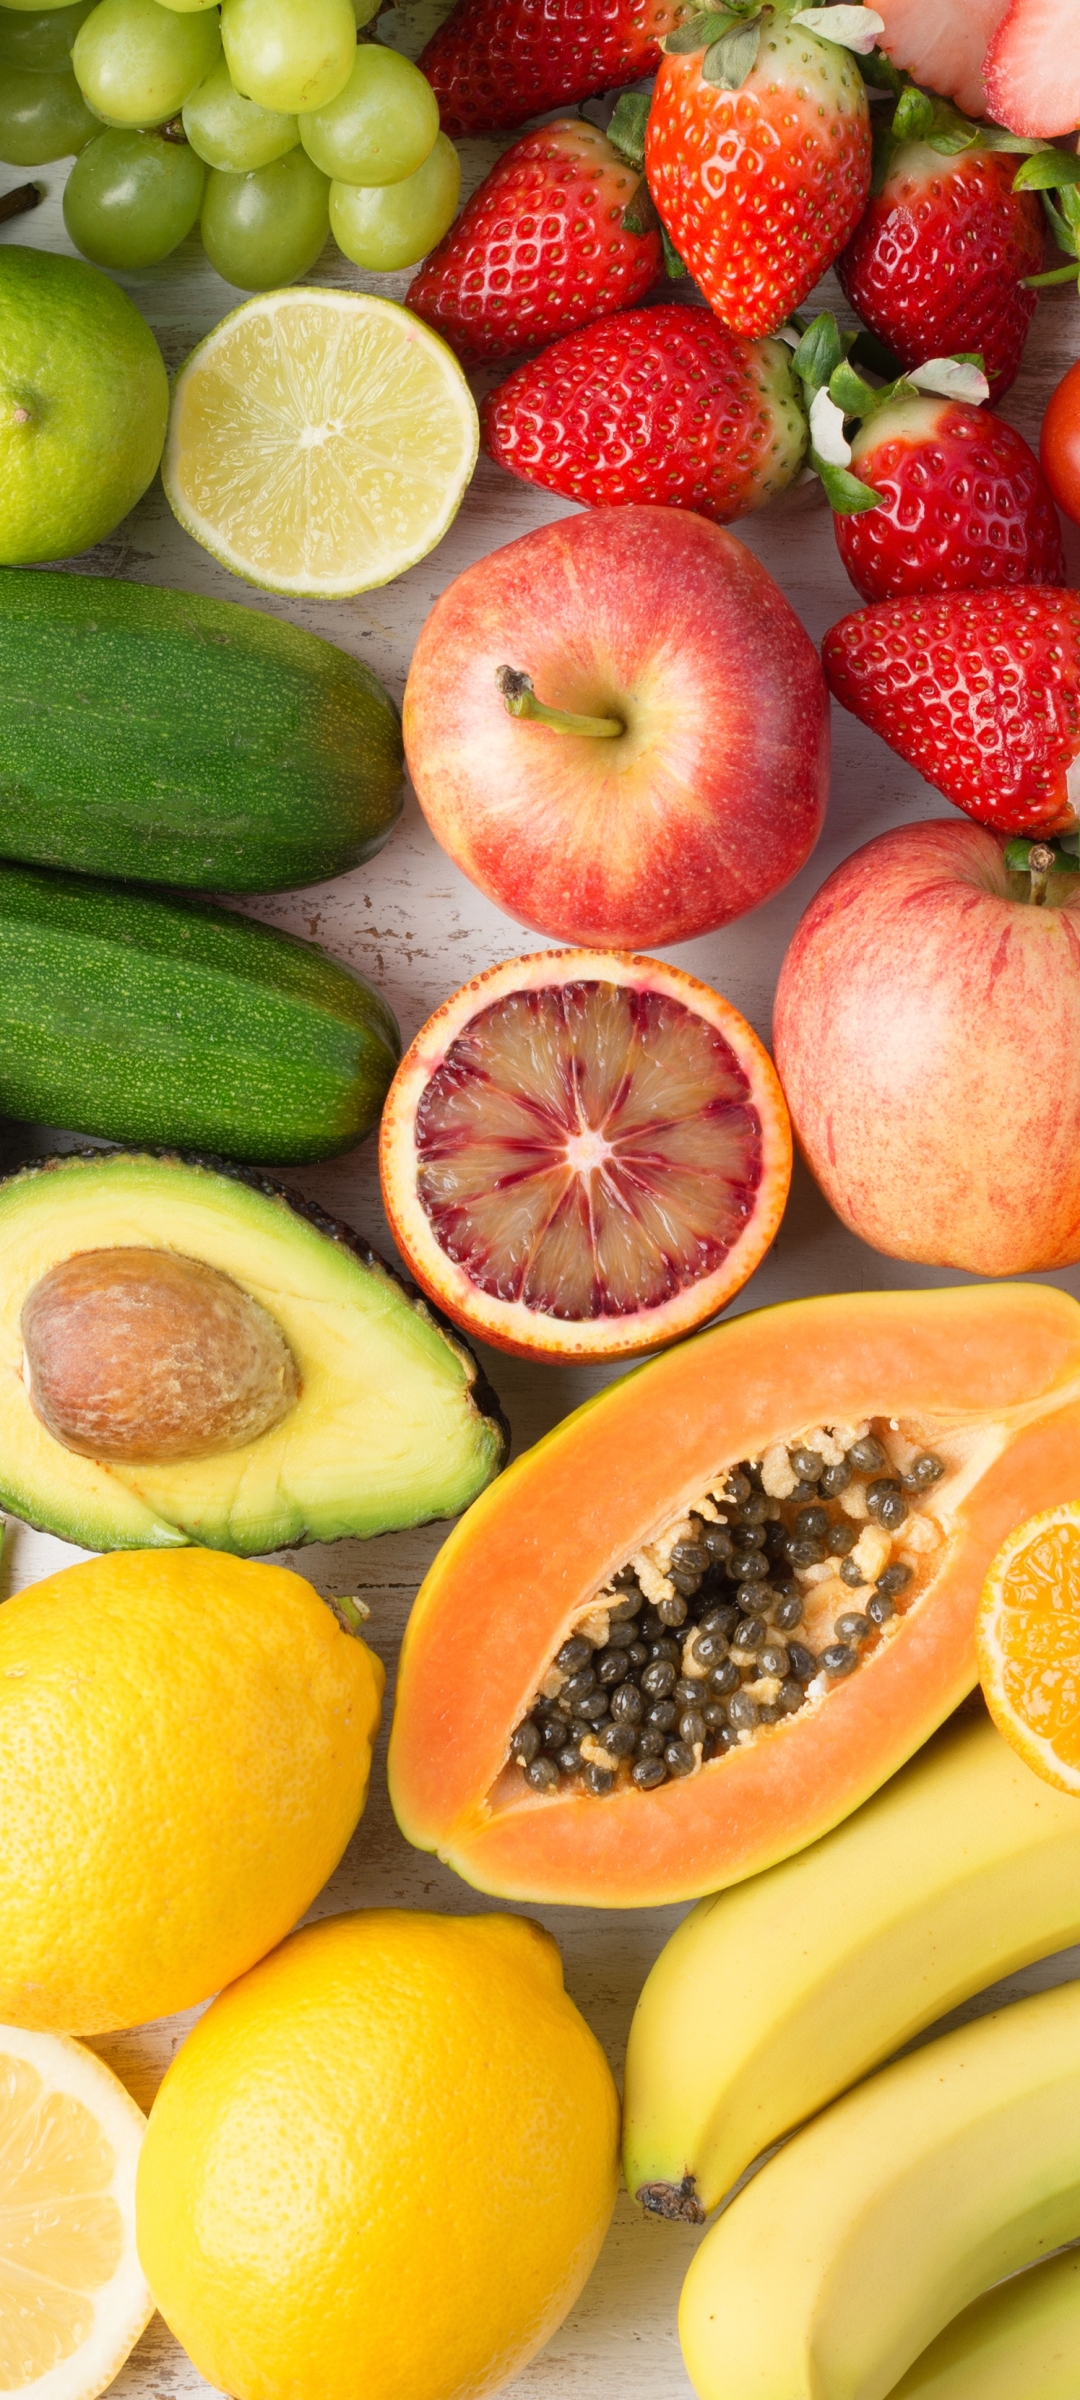 Fruits & Vegetables Phone Wallpaper